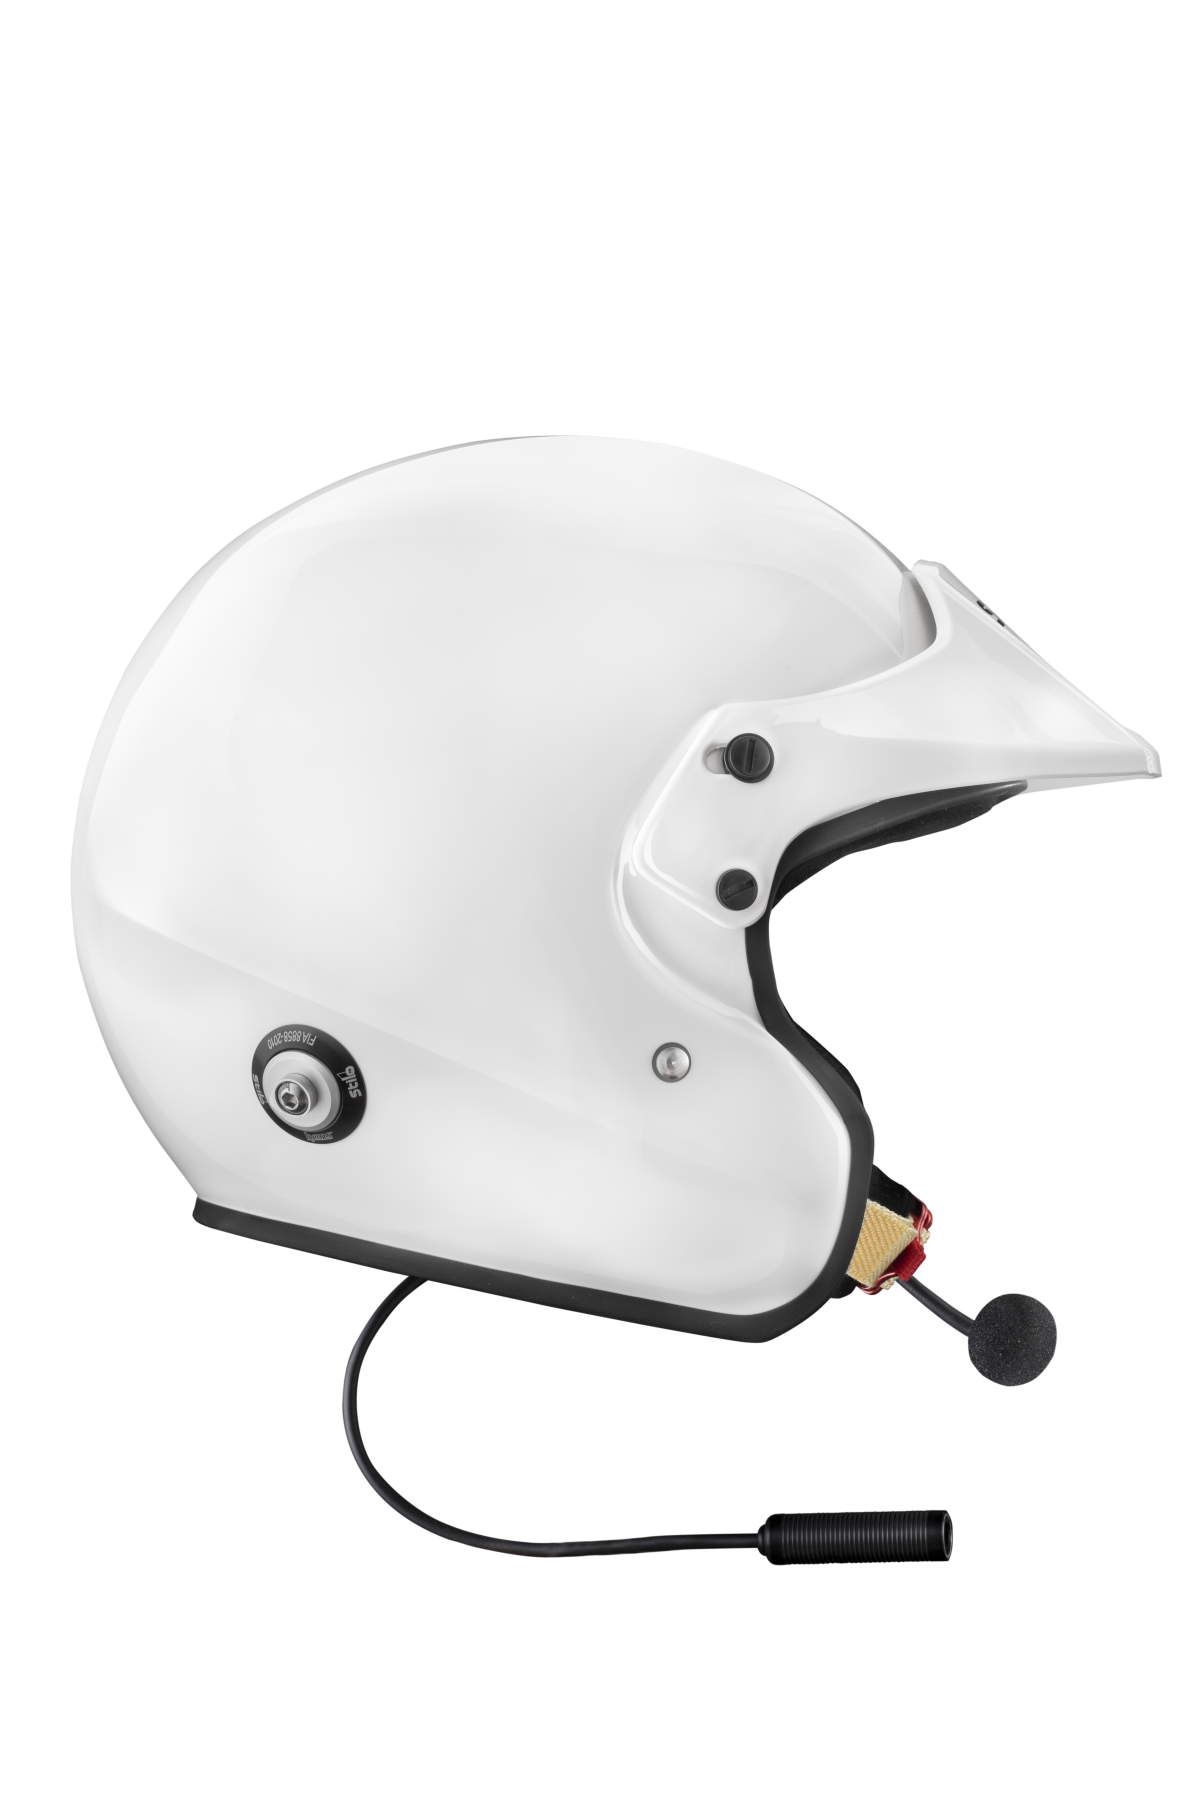 Sparco RJ-i jet helmet FIA 8859-2015 white color